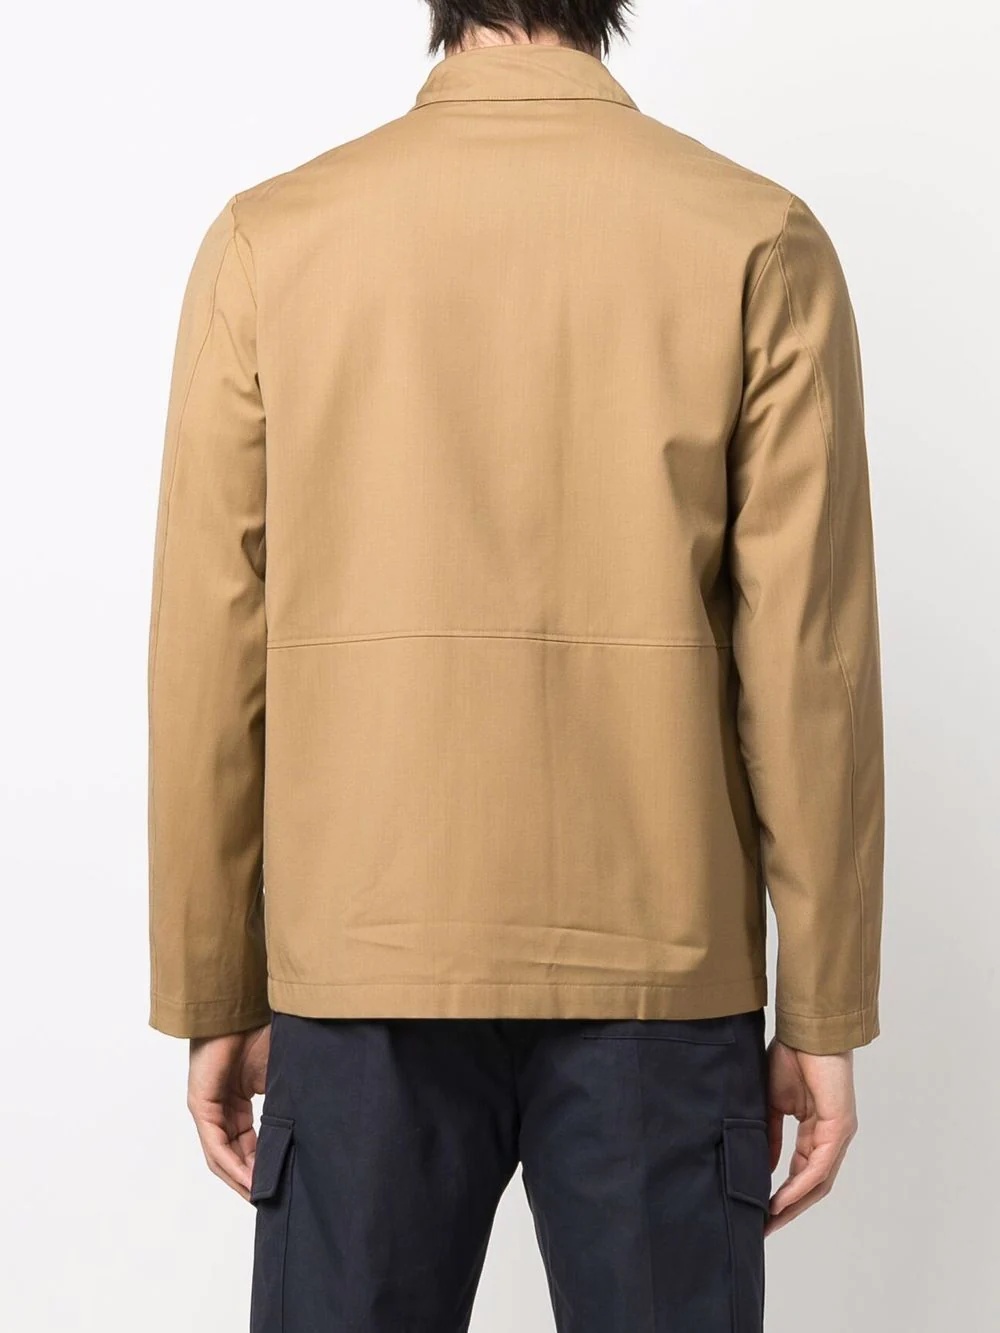 wool shirt jacket - 4